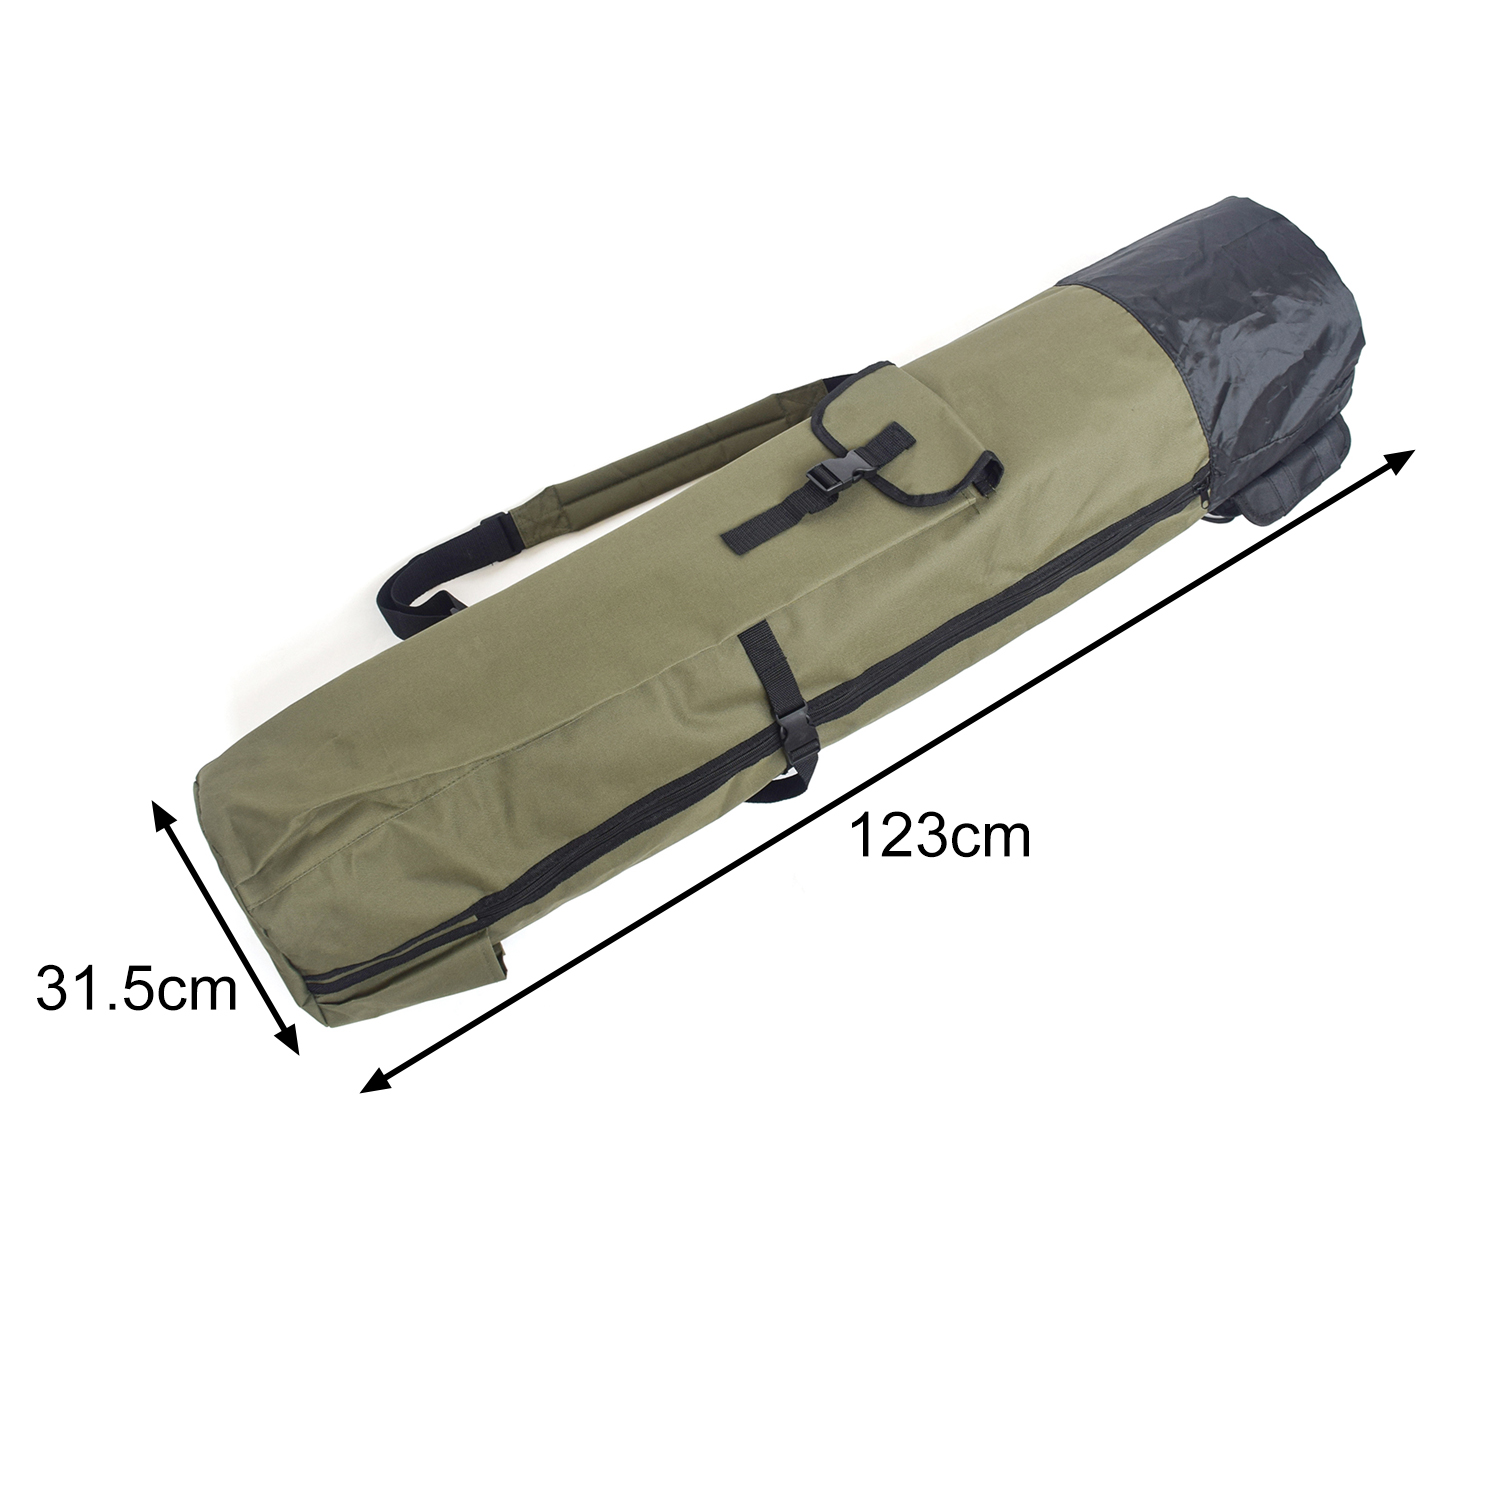 MSDFR-1 Fishing rod bag size2